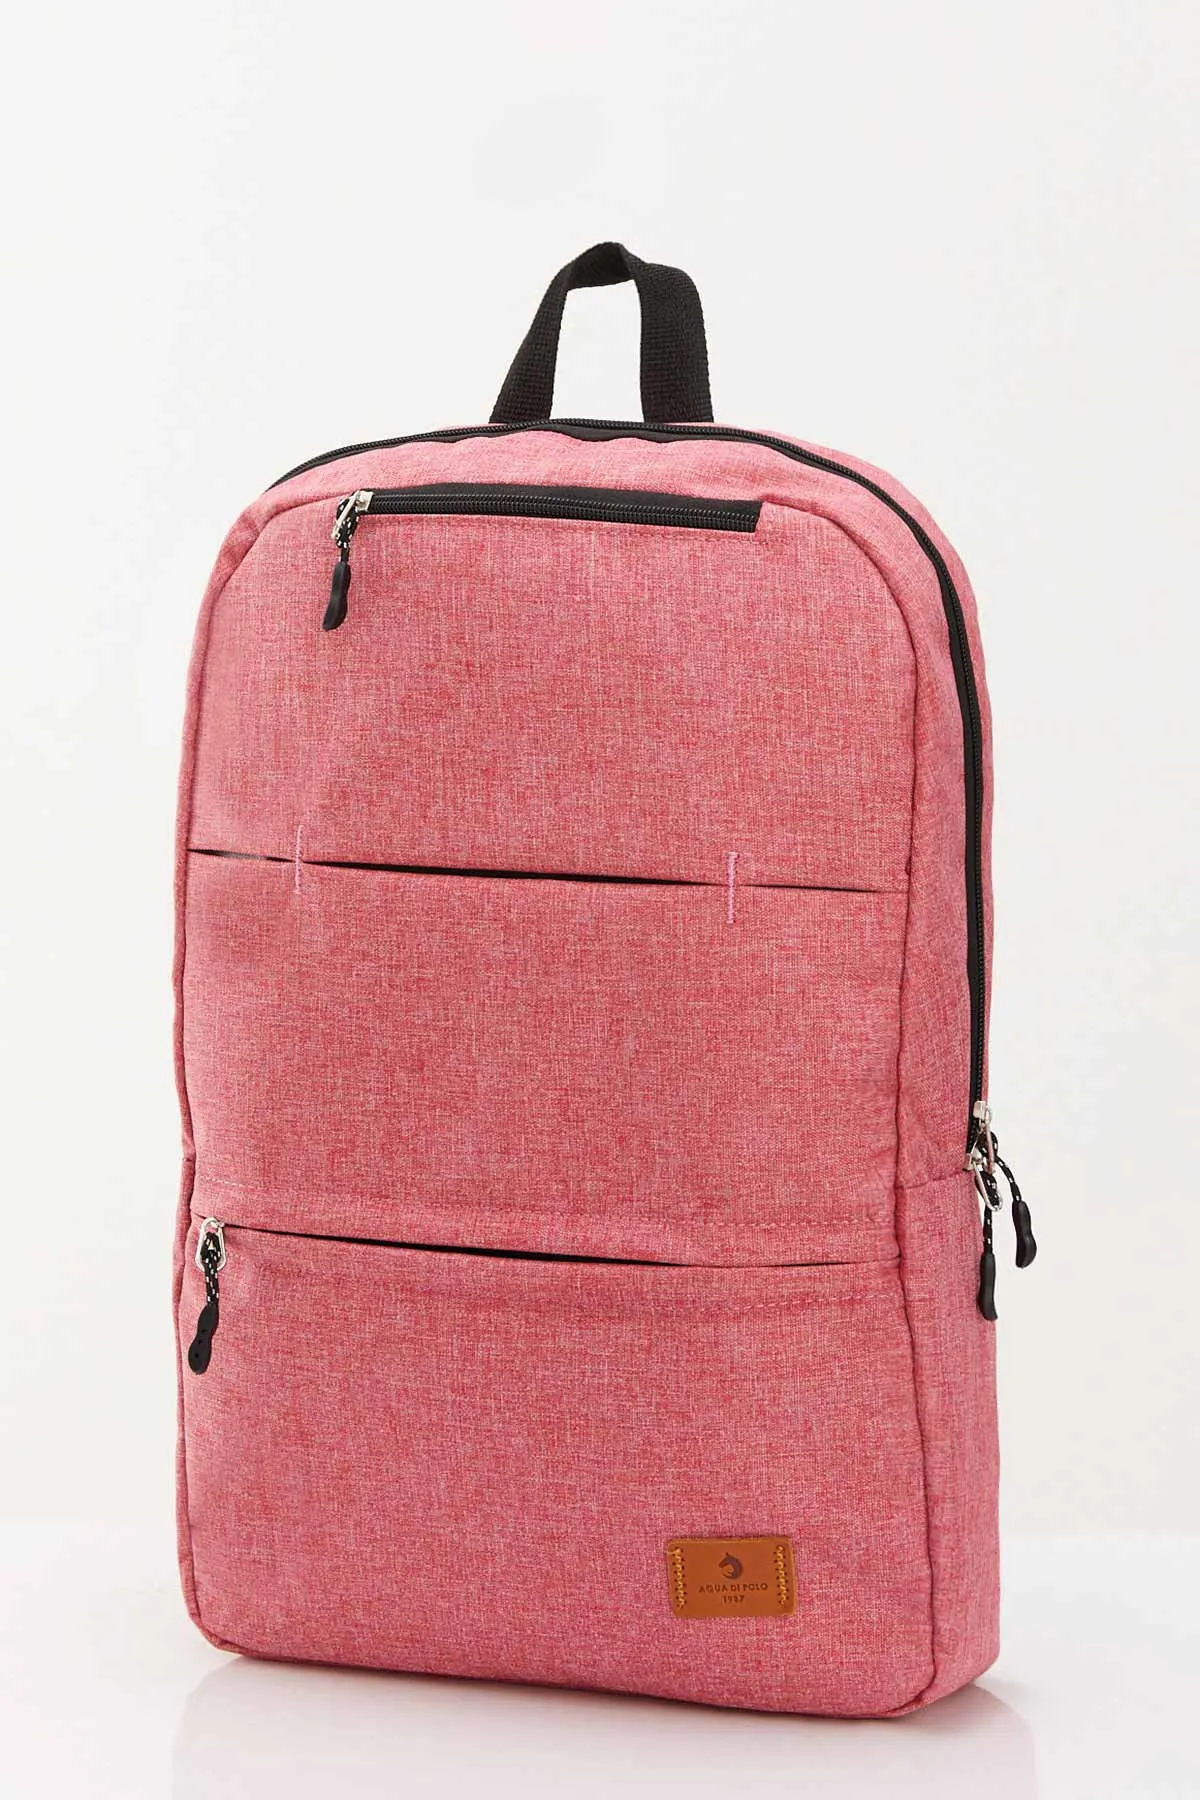 Рюкзак унисекс Di Polo apba0109 розовый#2